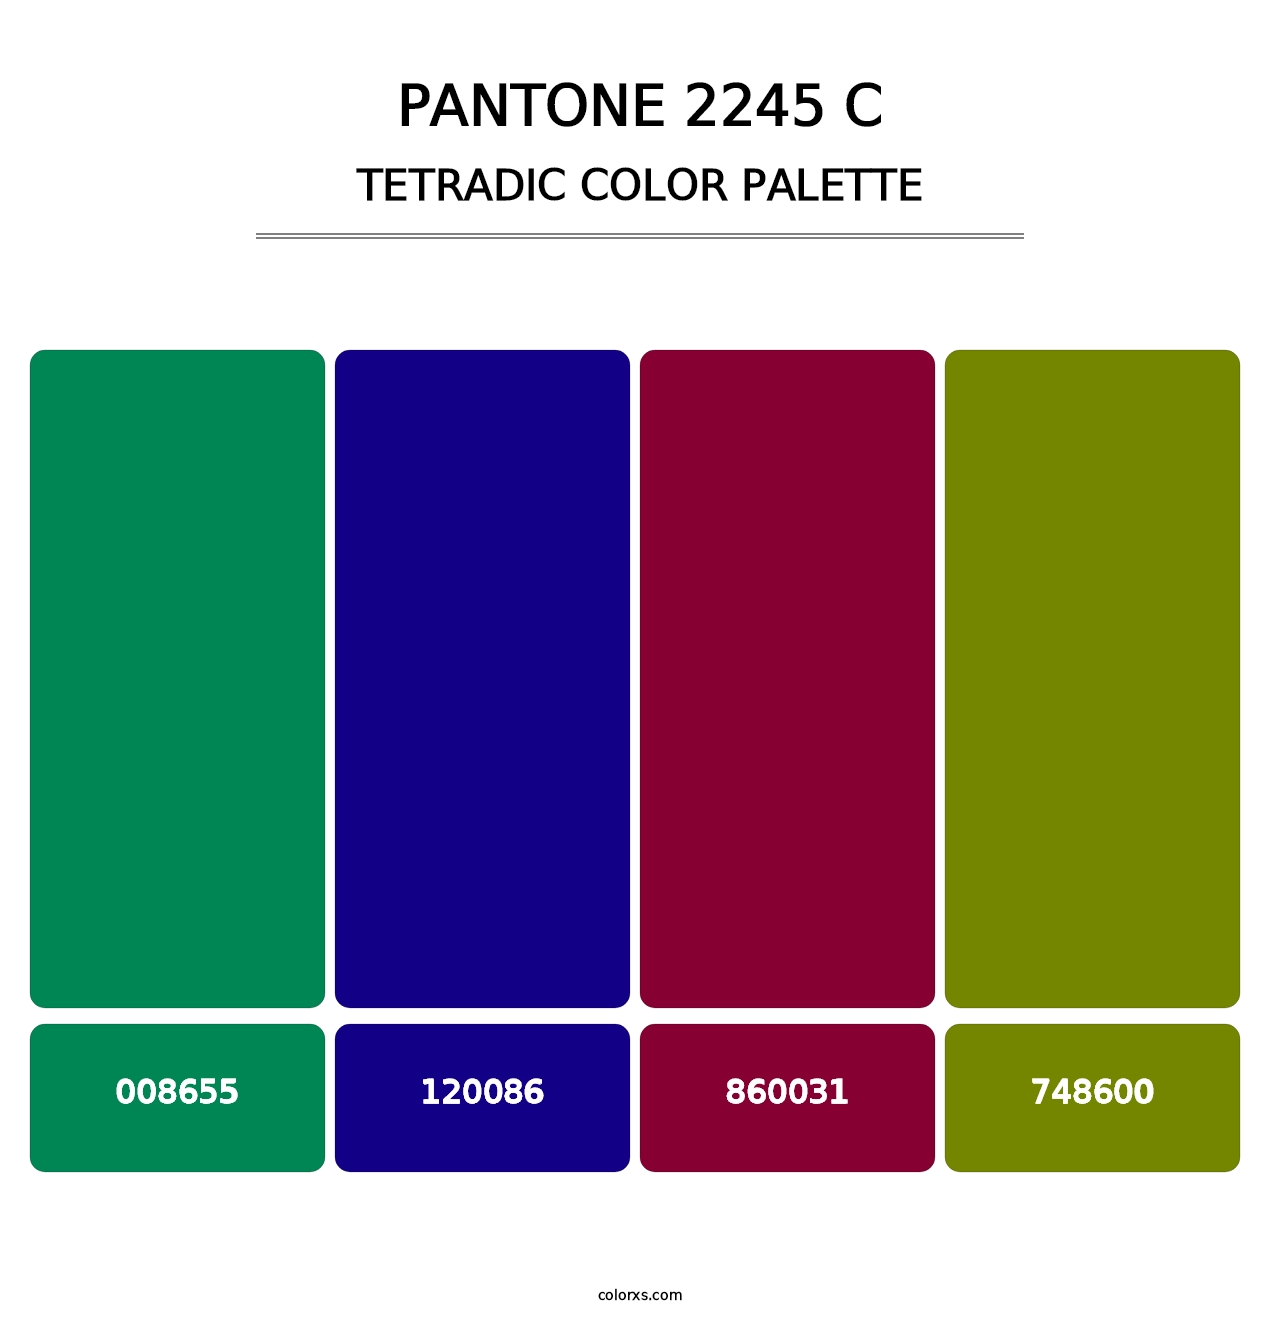 PANTONE 2245 C - Tetradic Color Palette